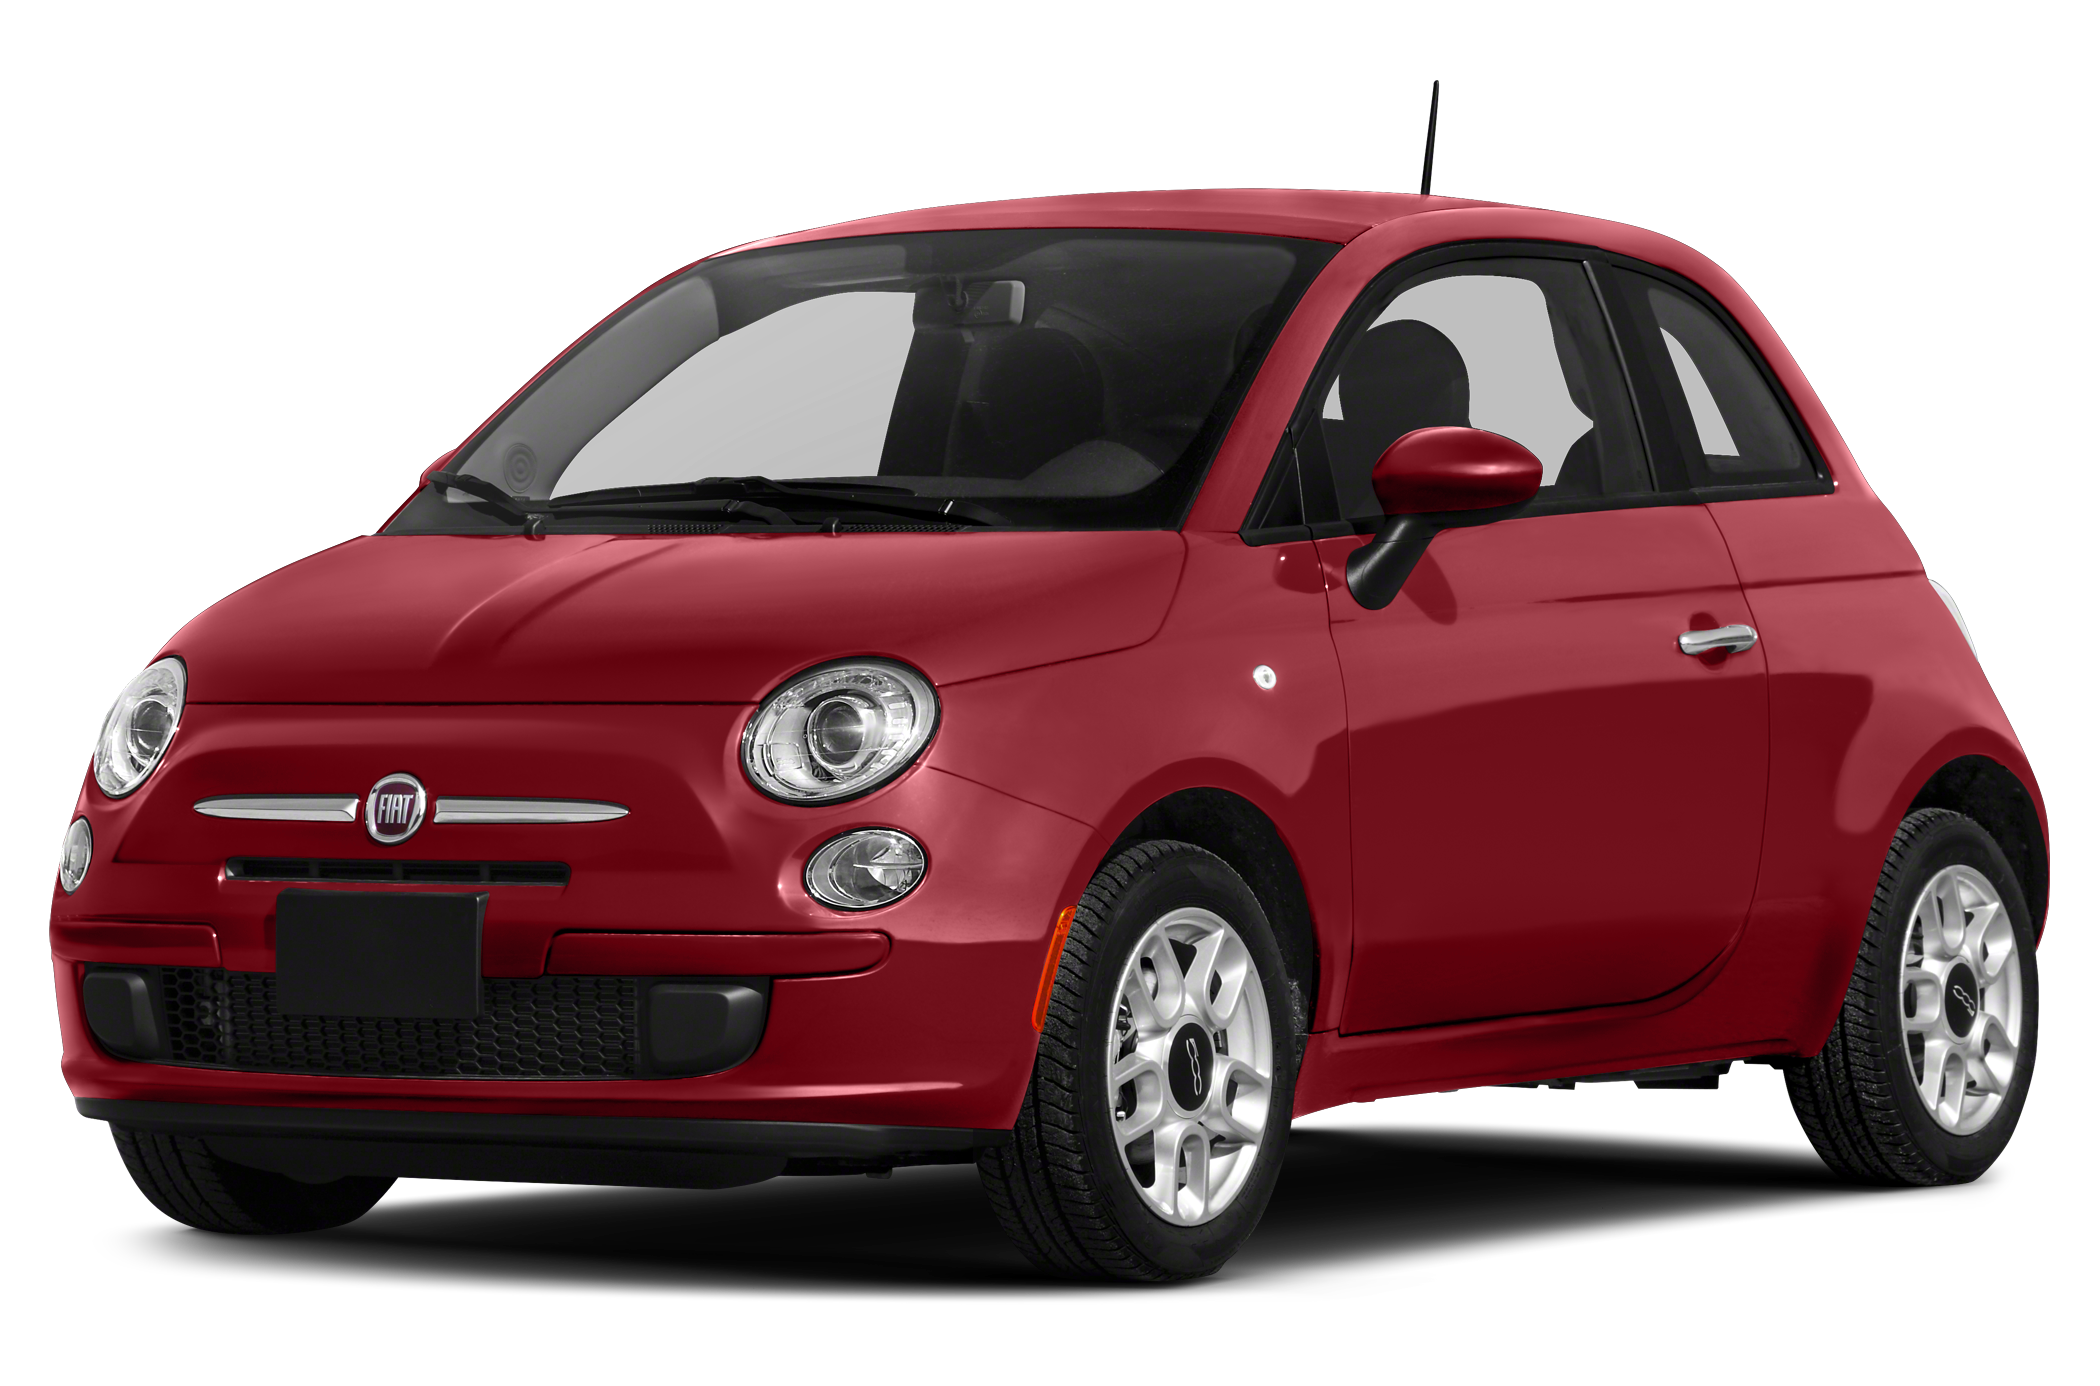 Fiat 500 Price, Images, Mileage, Reviews, Specs